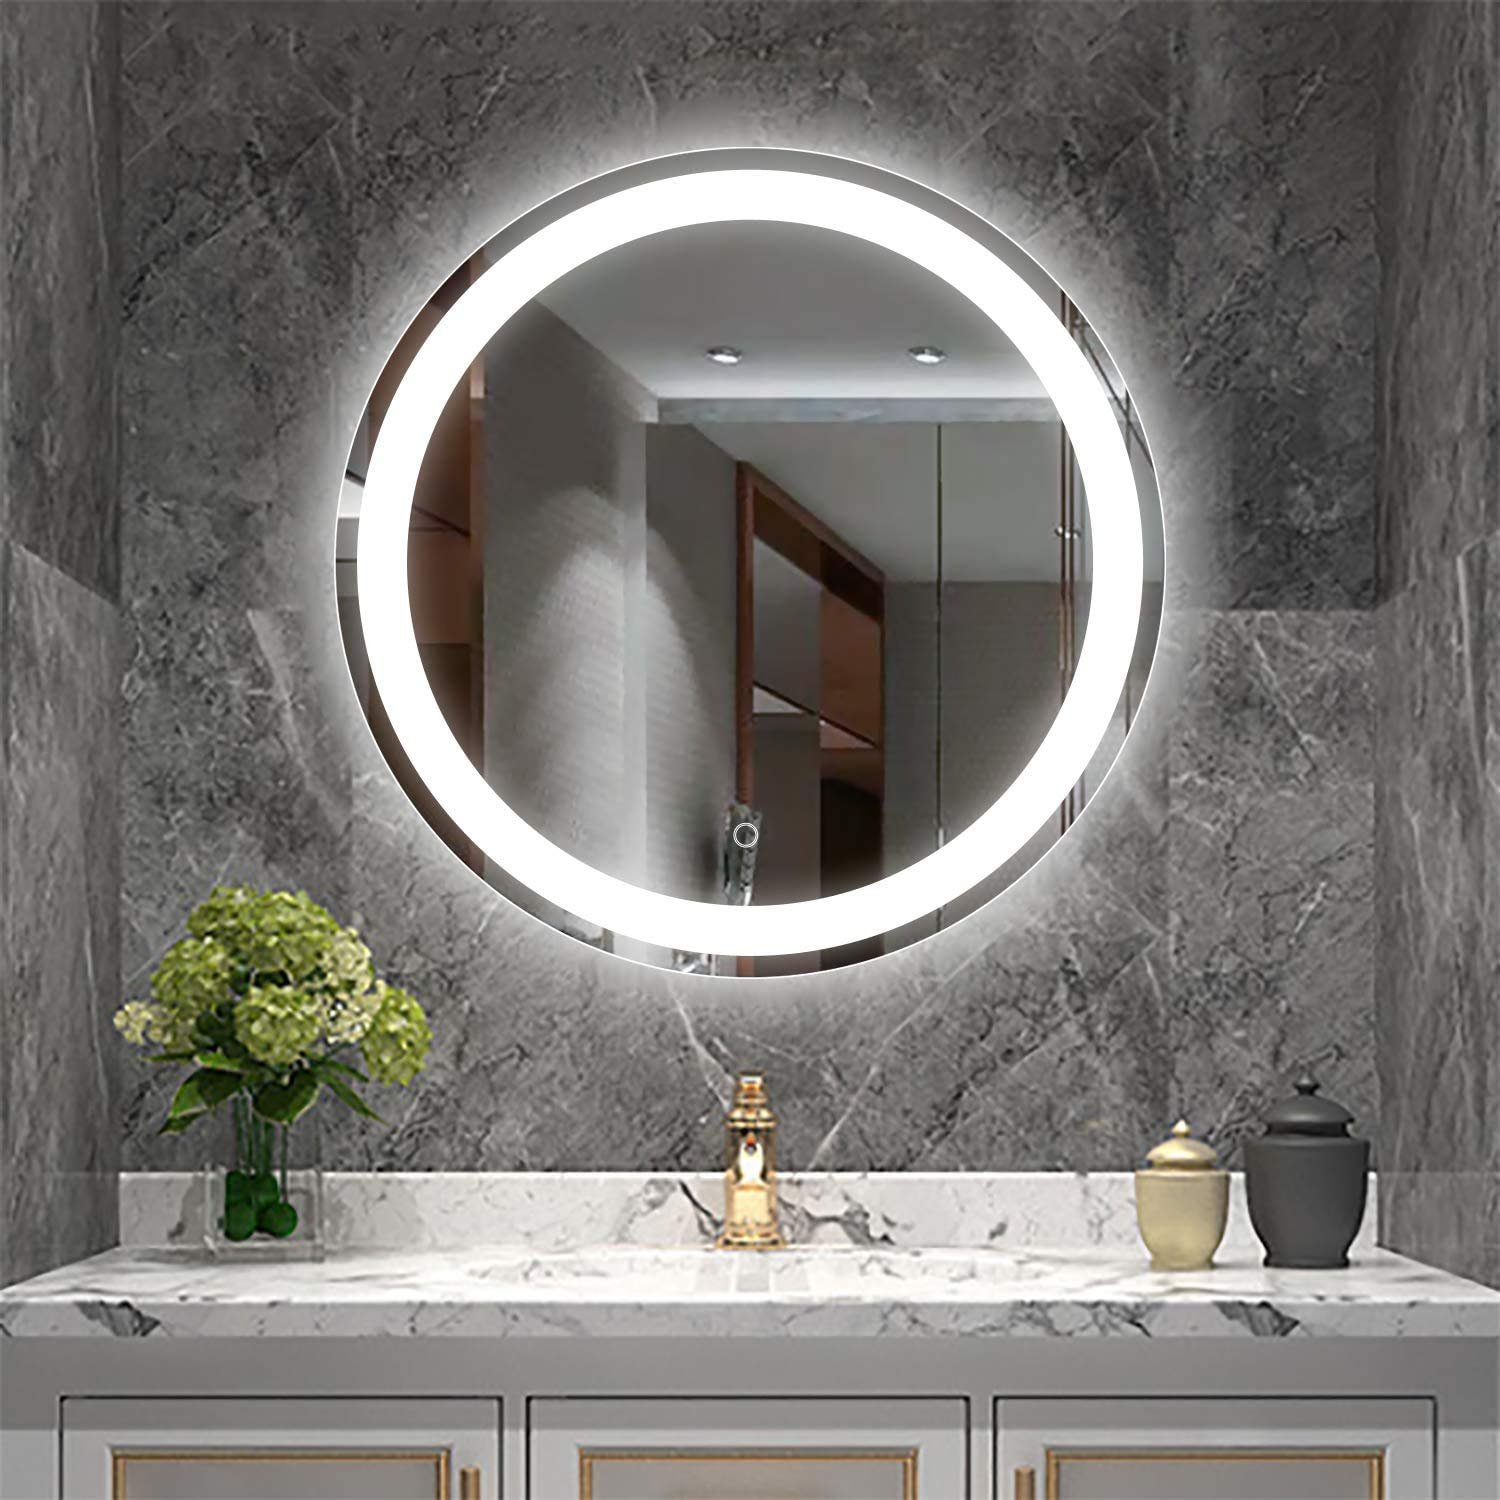 LED Mirror Cabinets: The Future of Bathroom Design